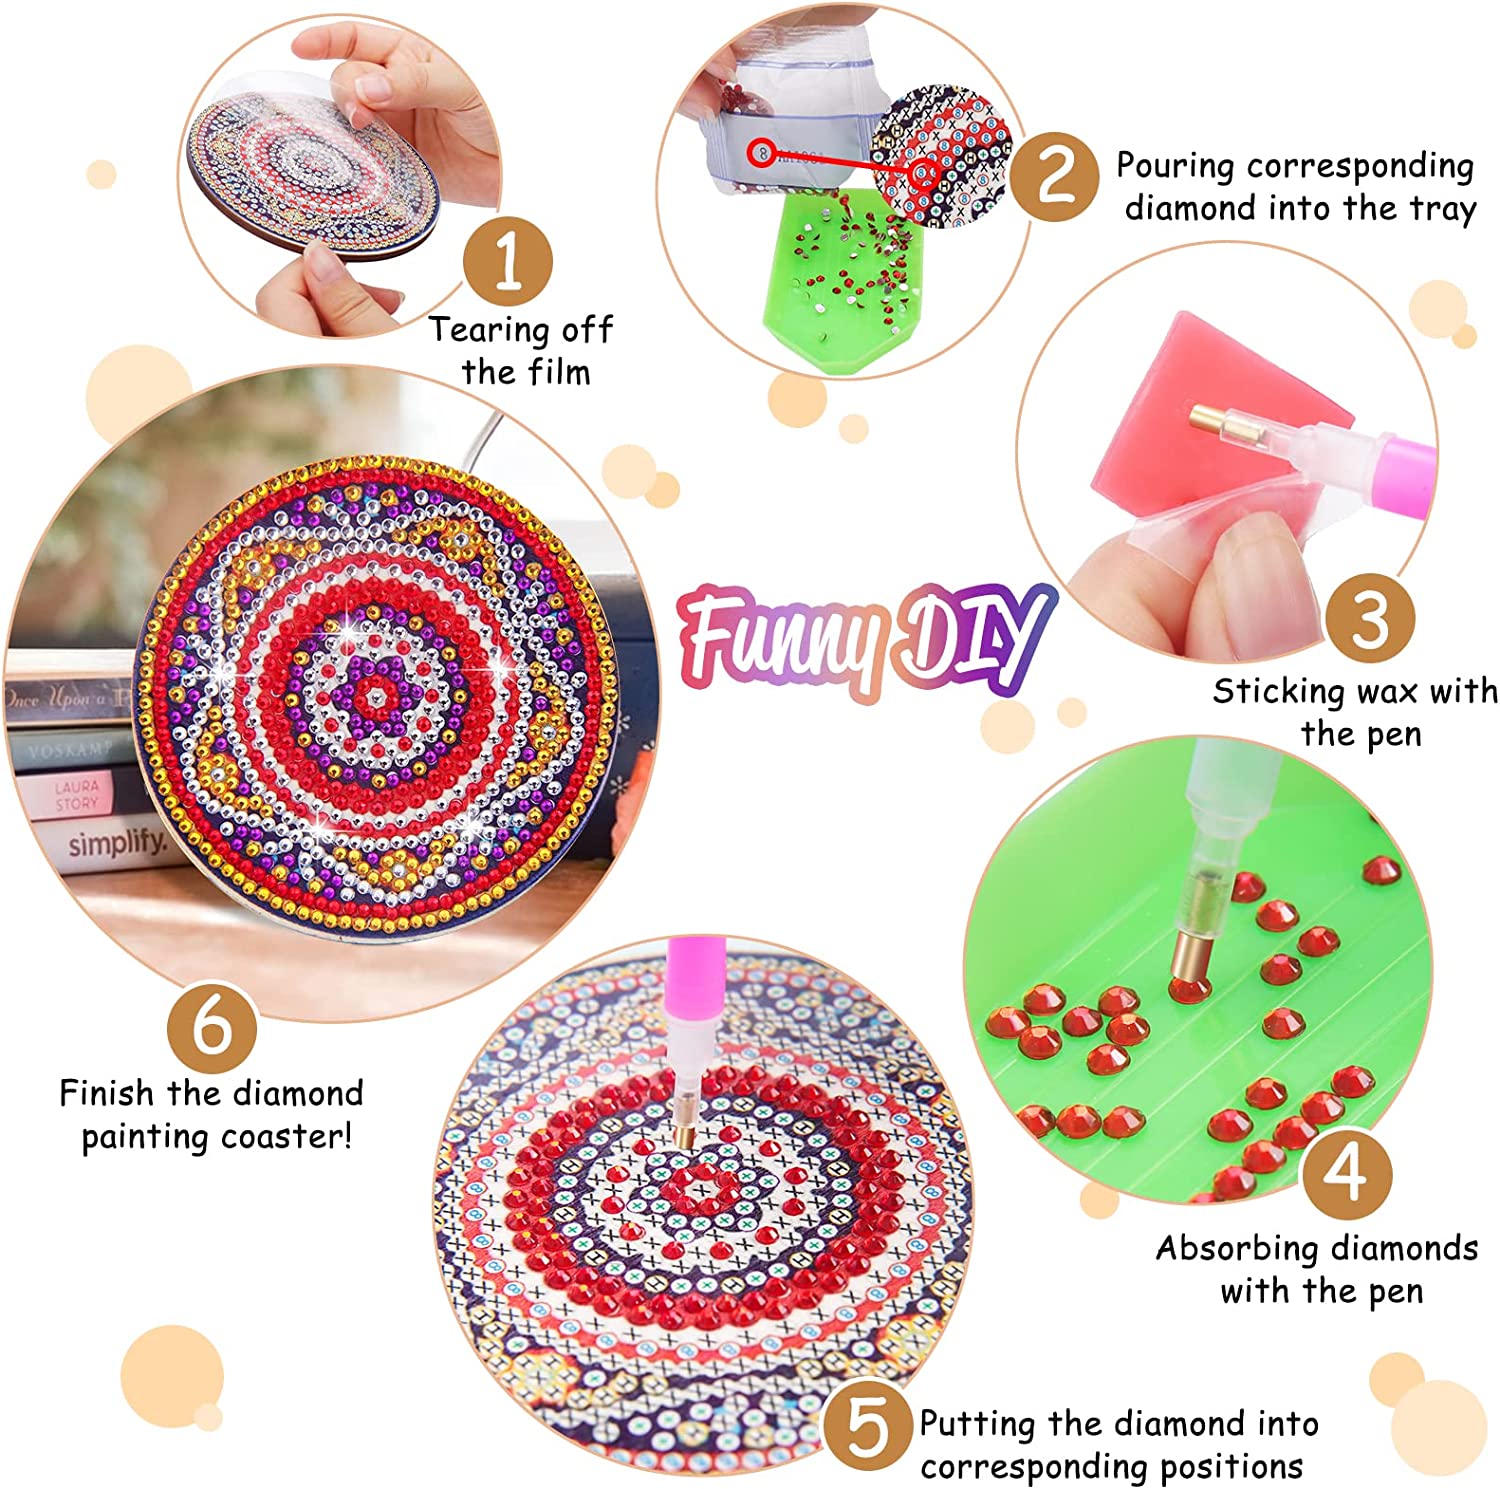 6 Pcs Diamond Painting Coasters Kit with Holder, DIY Diamond Art Coasters Kits for Beginners, Kitchen Hot Pads,Adults & Kids Small Diamond Painting